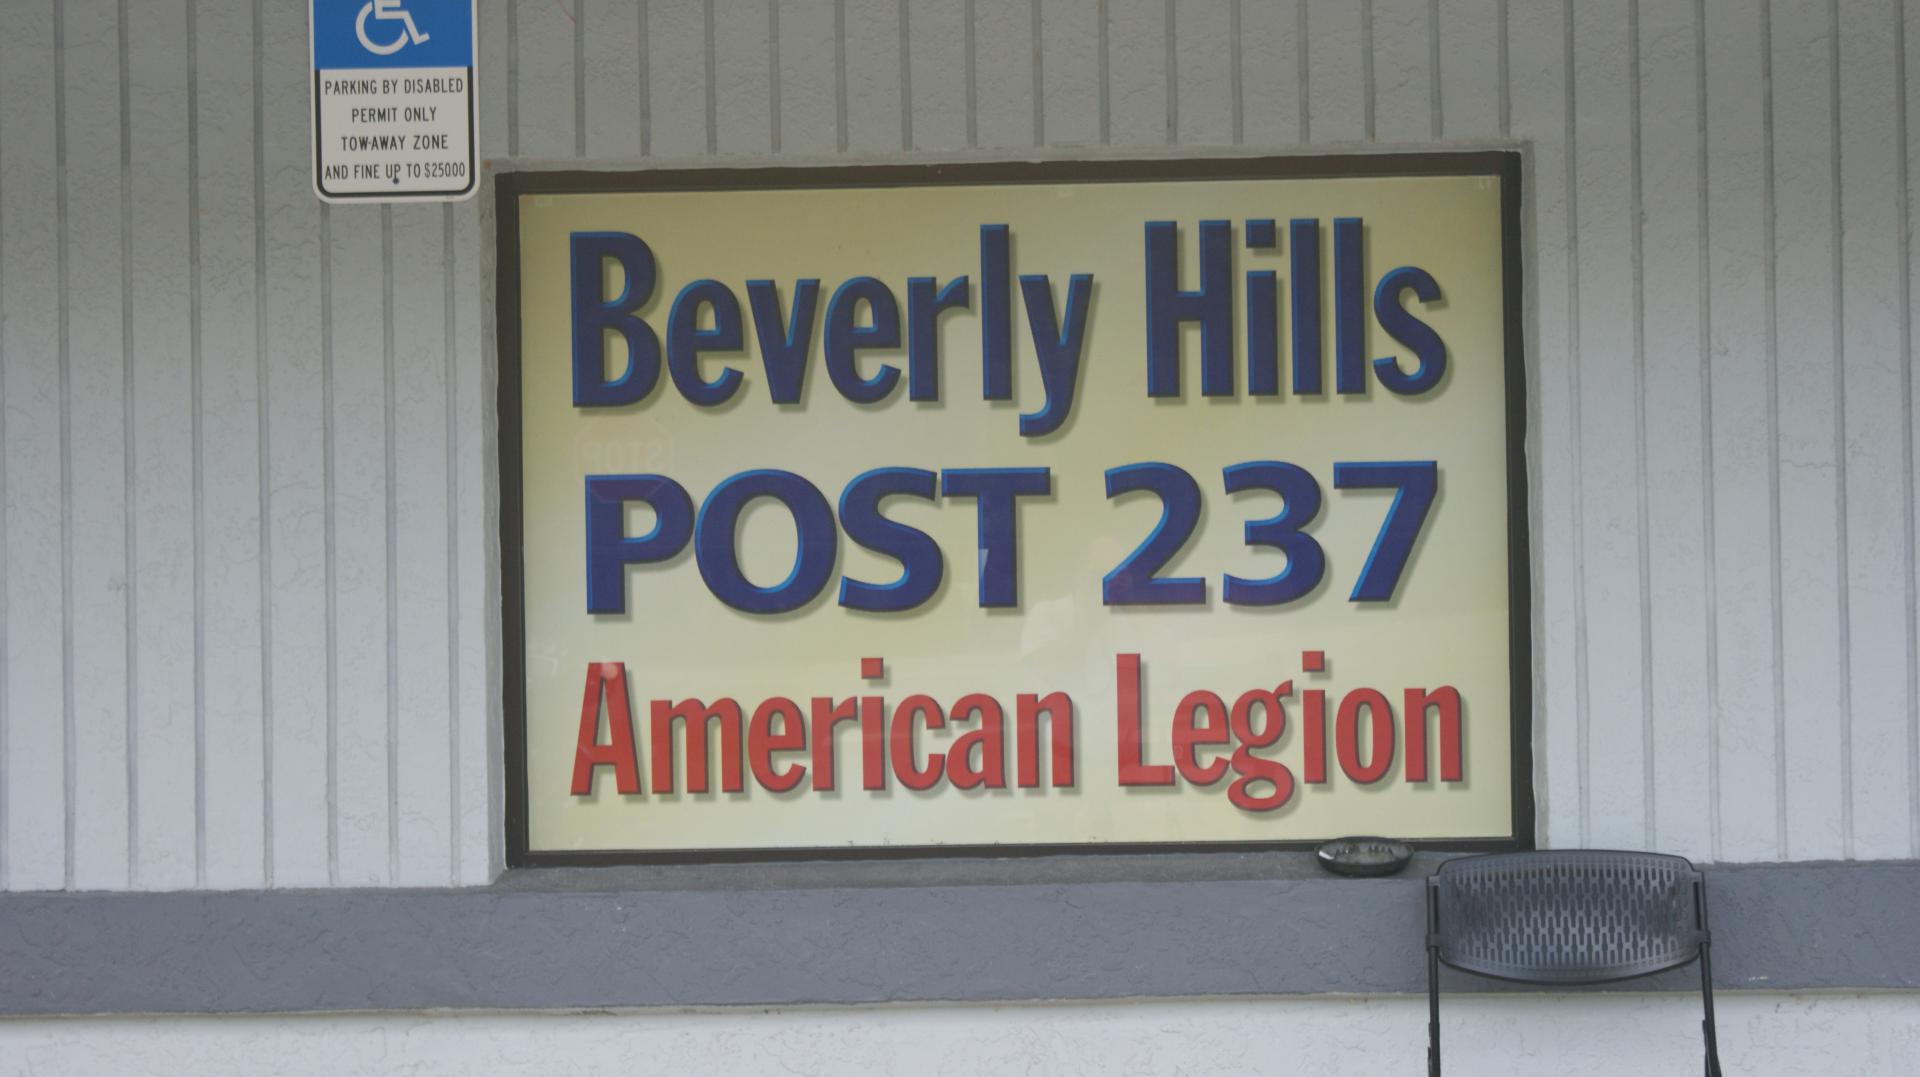 Post 237 Beverly Hills, Florida